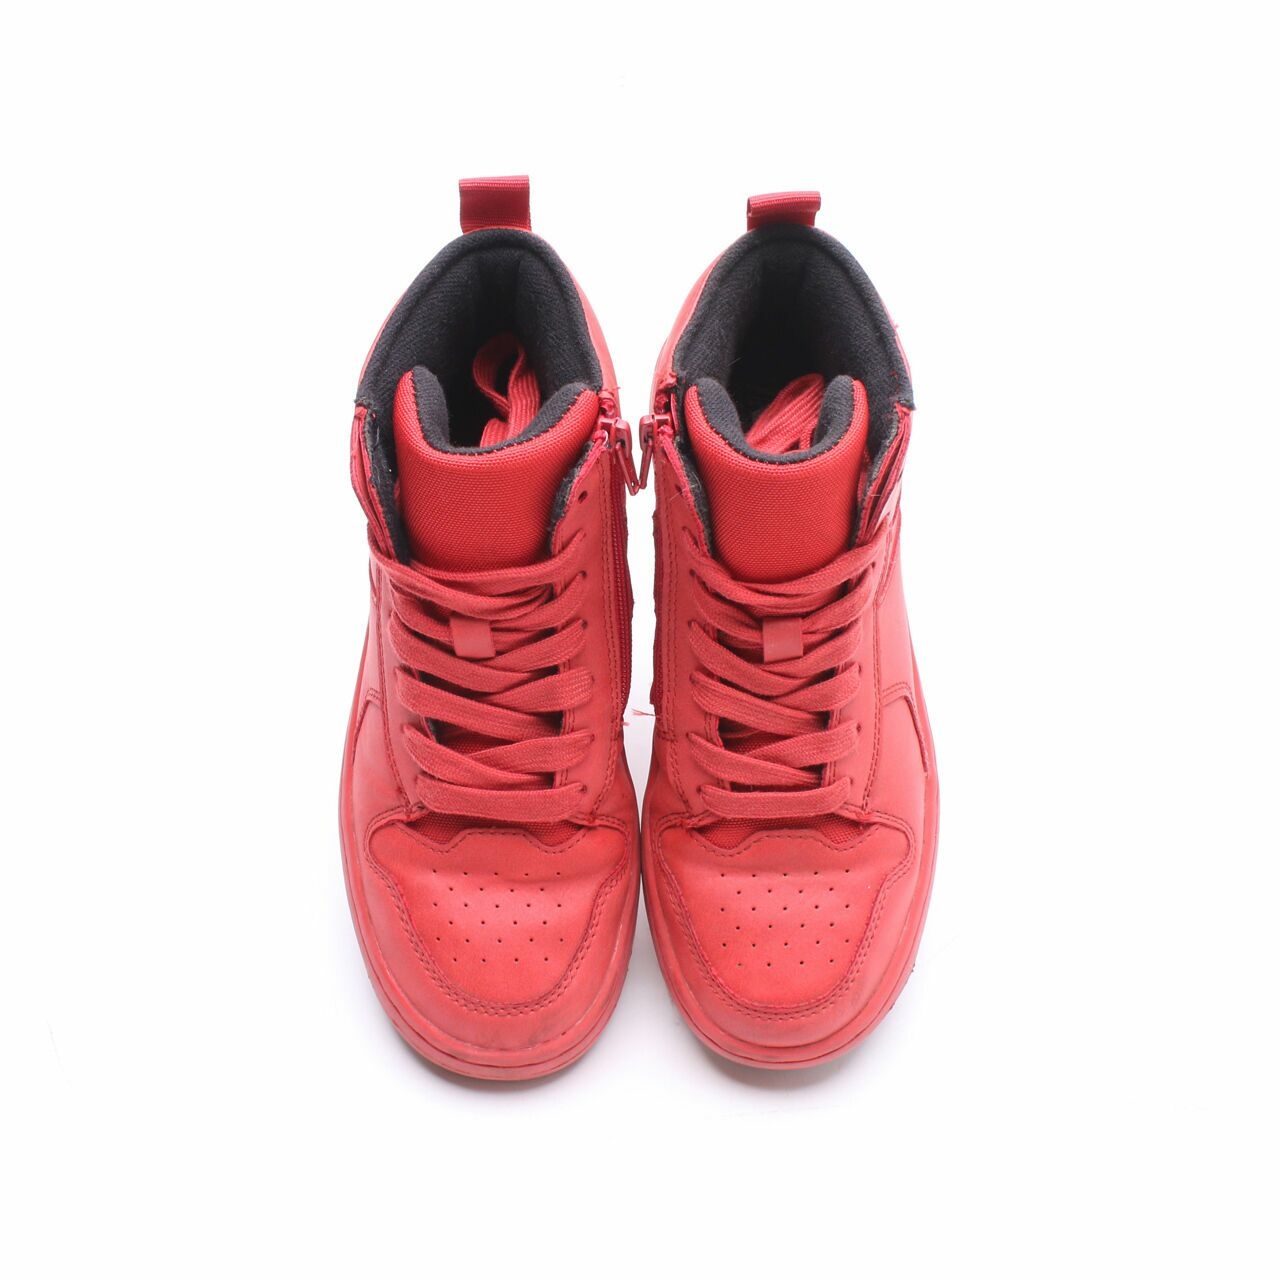 Zara Red Sneakers